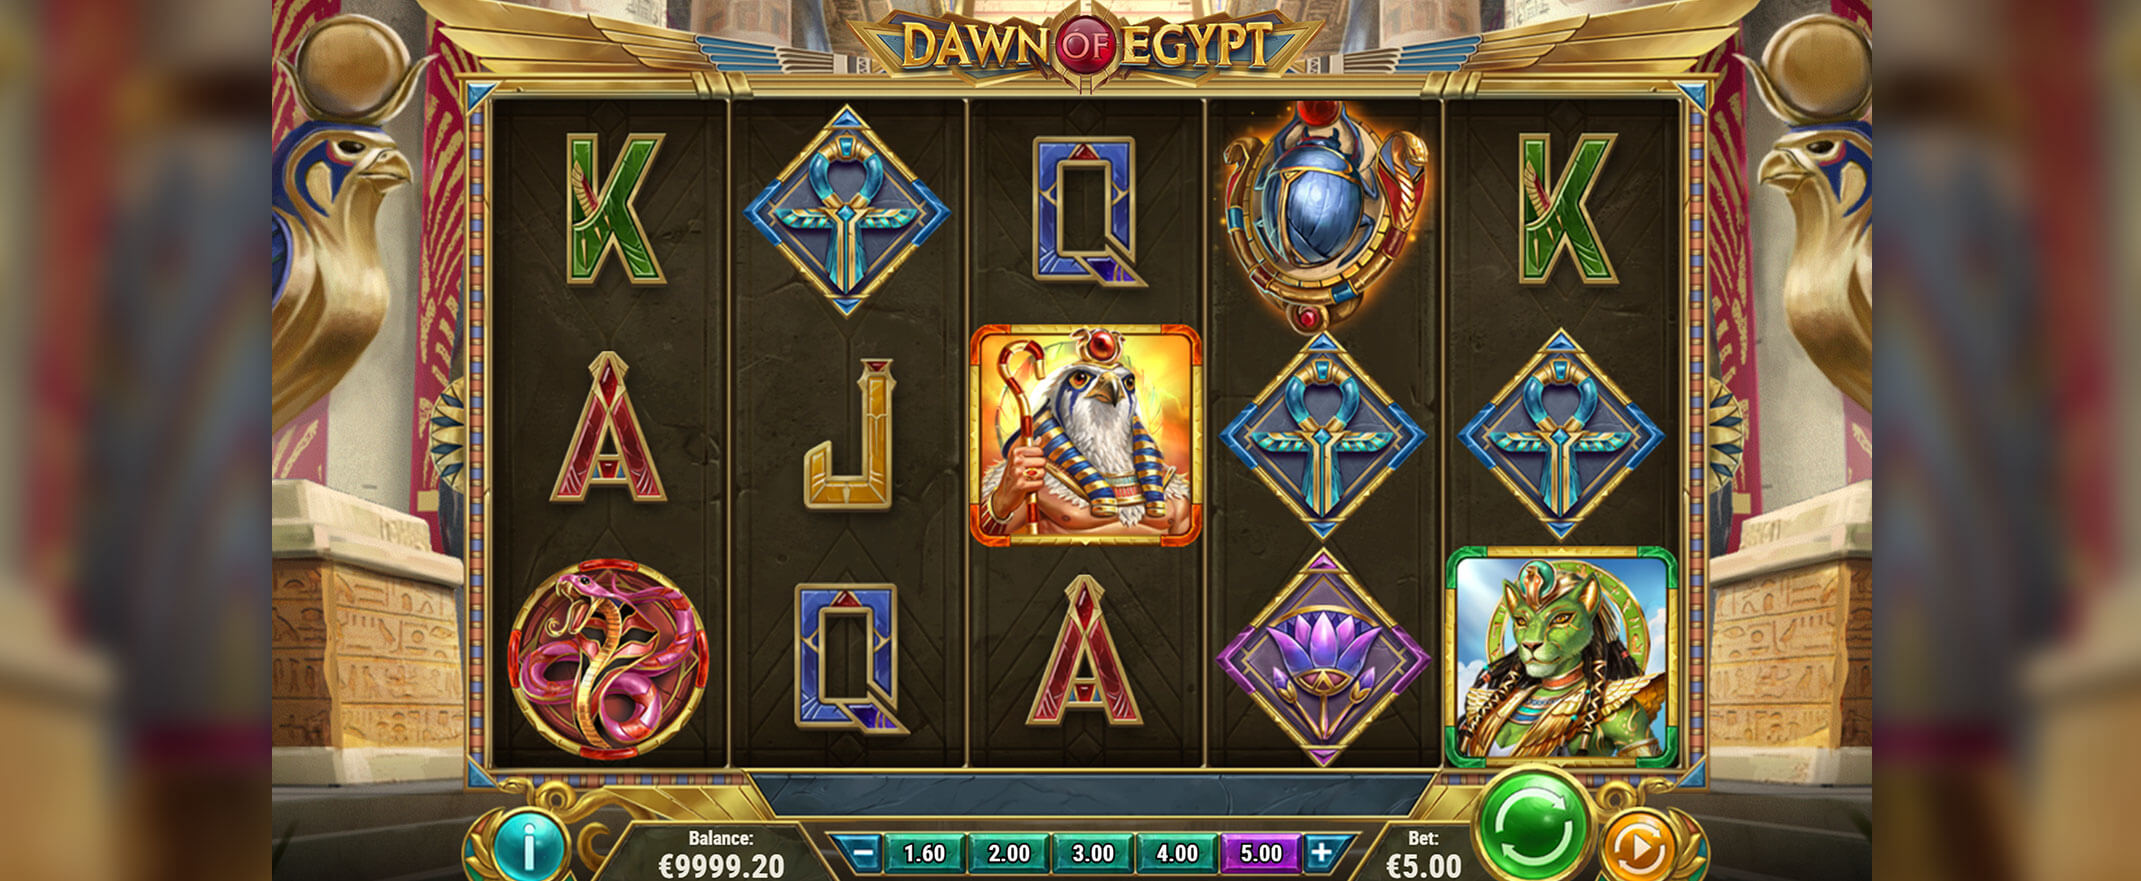 Dawn of Egypt Slot Screenshot